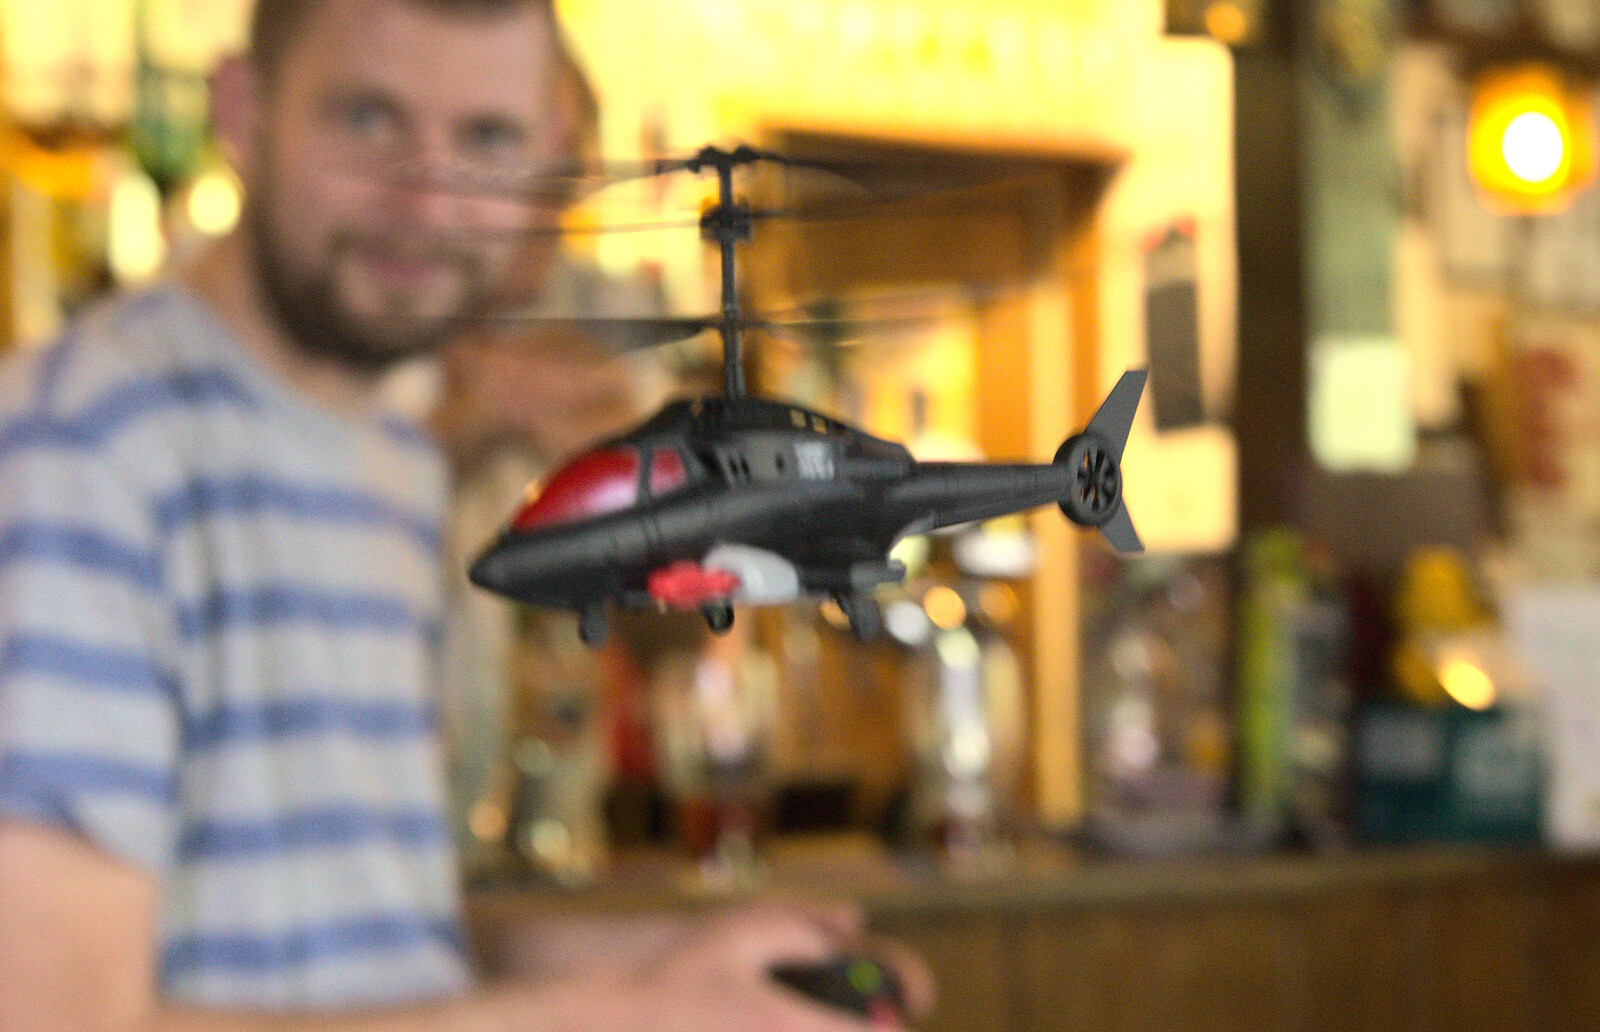 The Boy Phil flies Oak's drone from Matthew's Birthday up The Swan Inn, Brome, Suffolk - 17th August 2014